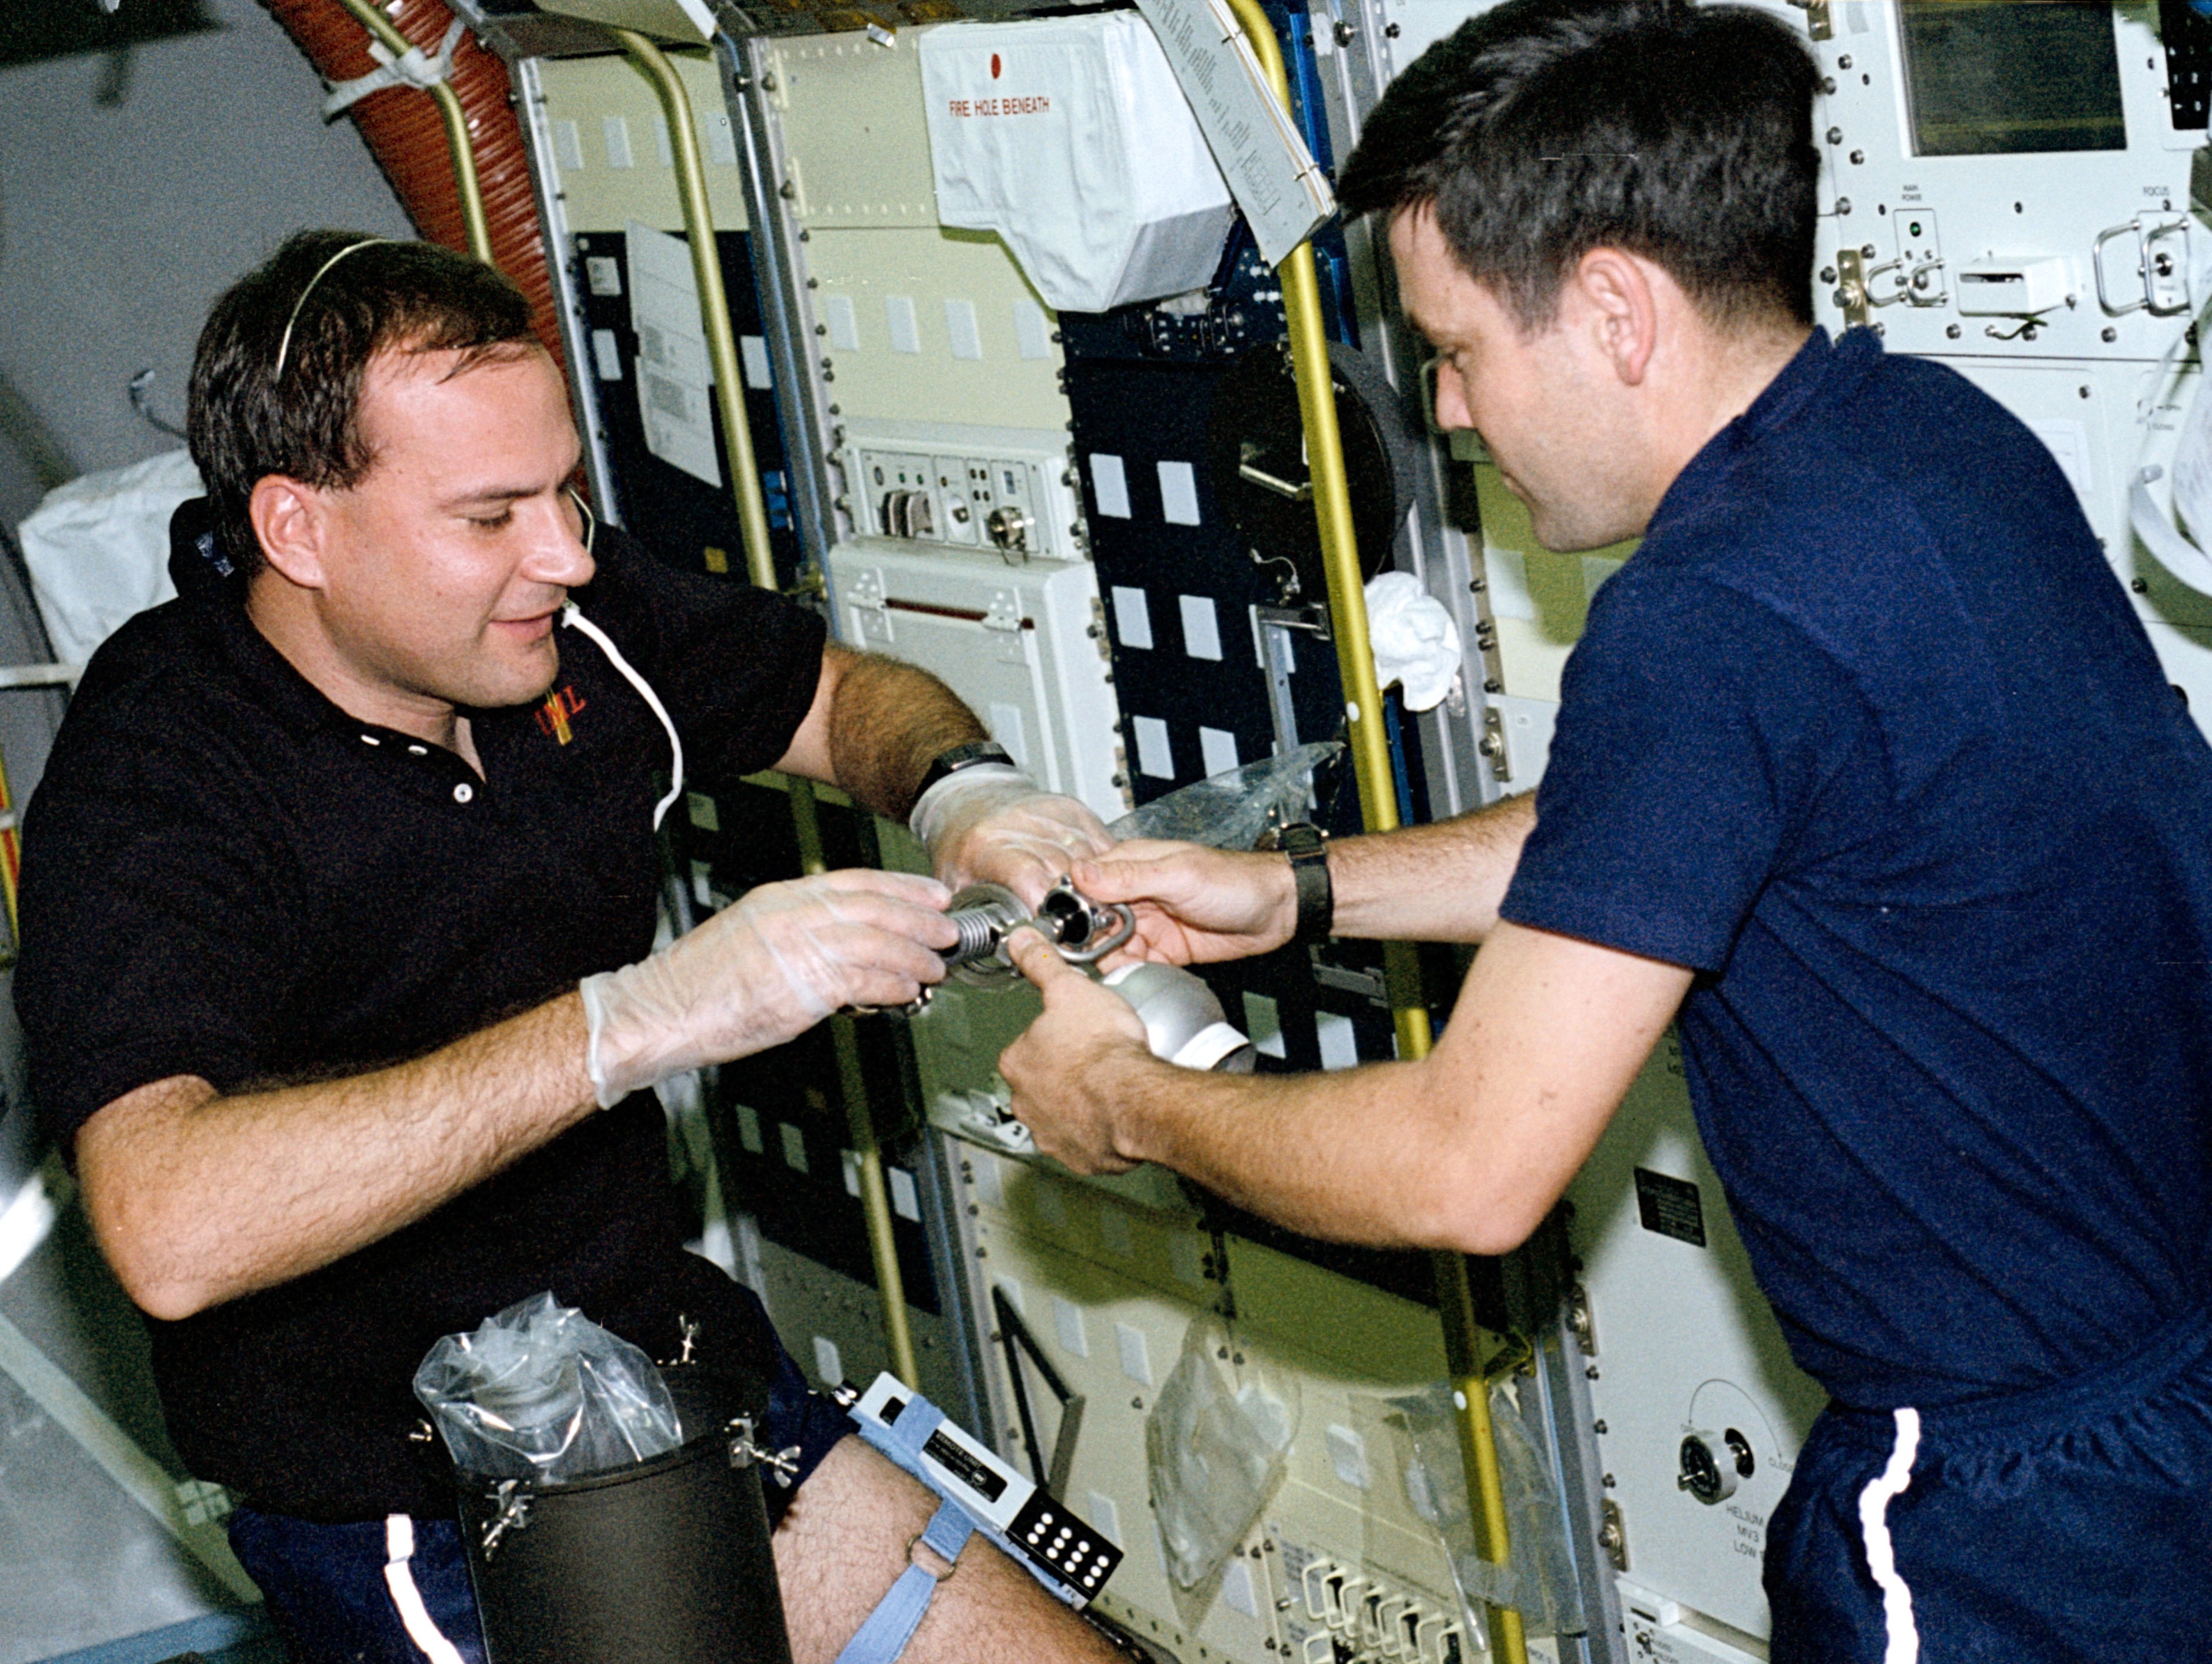 Richard J. Hieb, left, and Robert D. Cabana take an air sample from an experiment